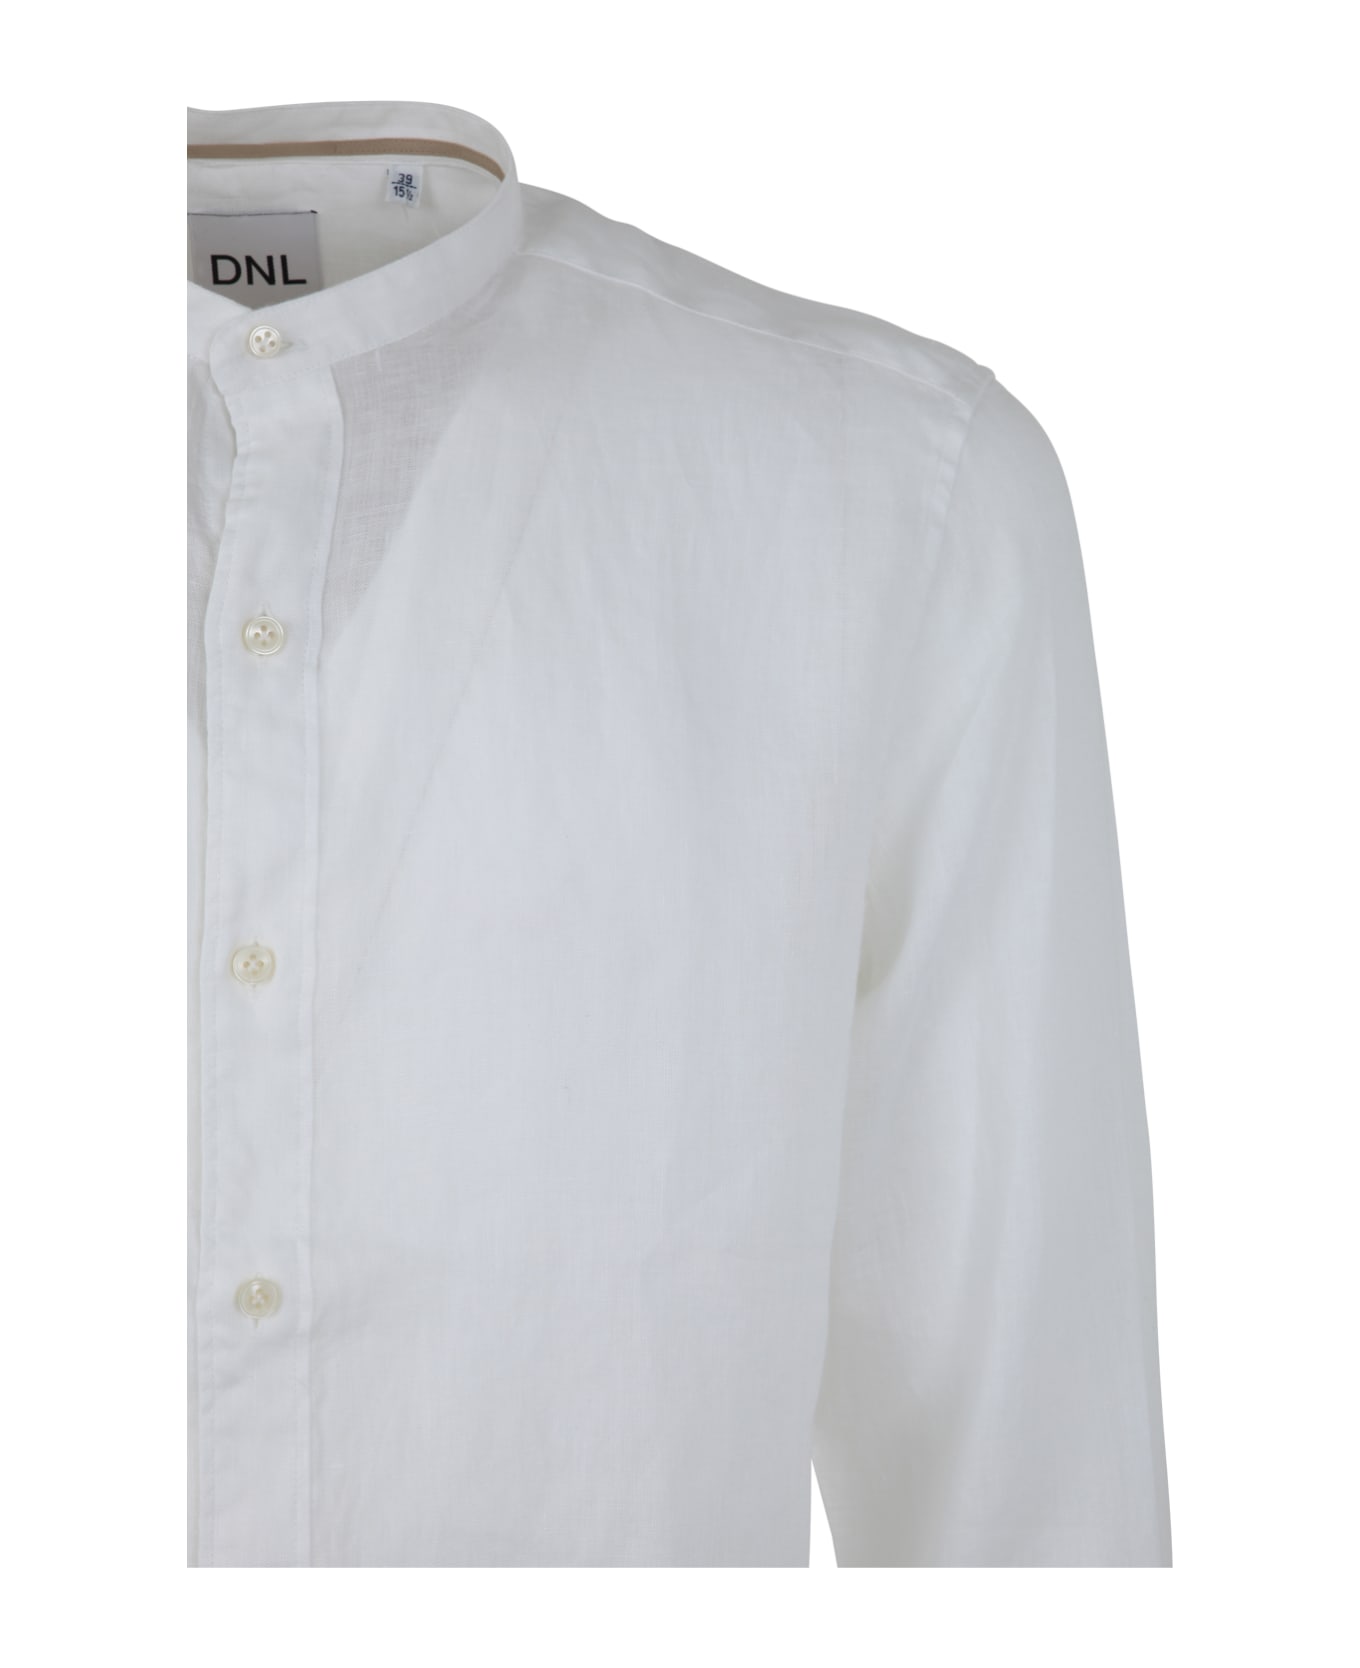 DNL Korean Neck Shirt - White シャツ